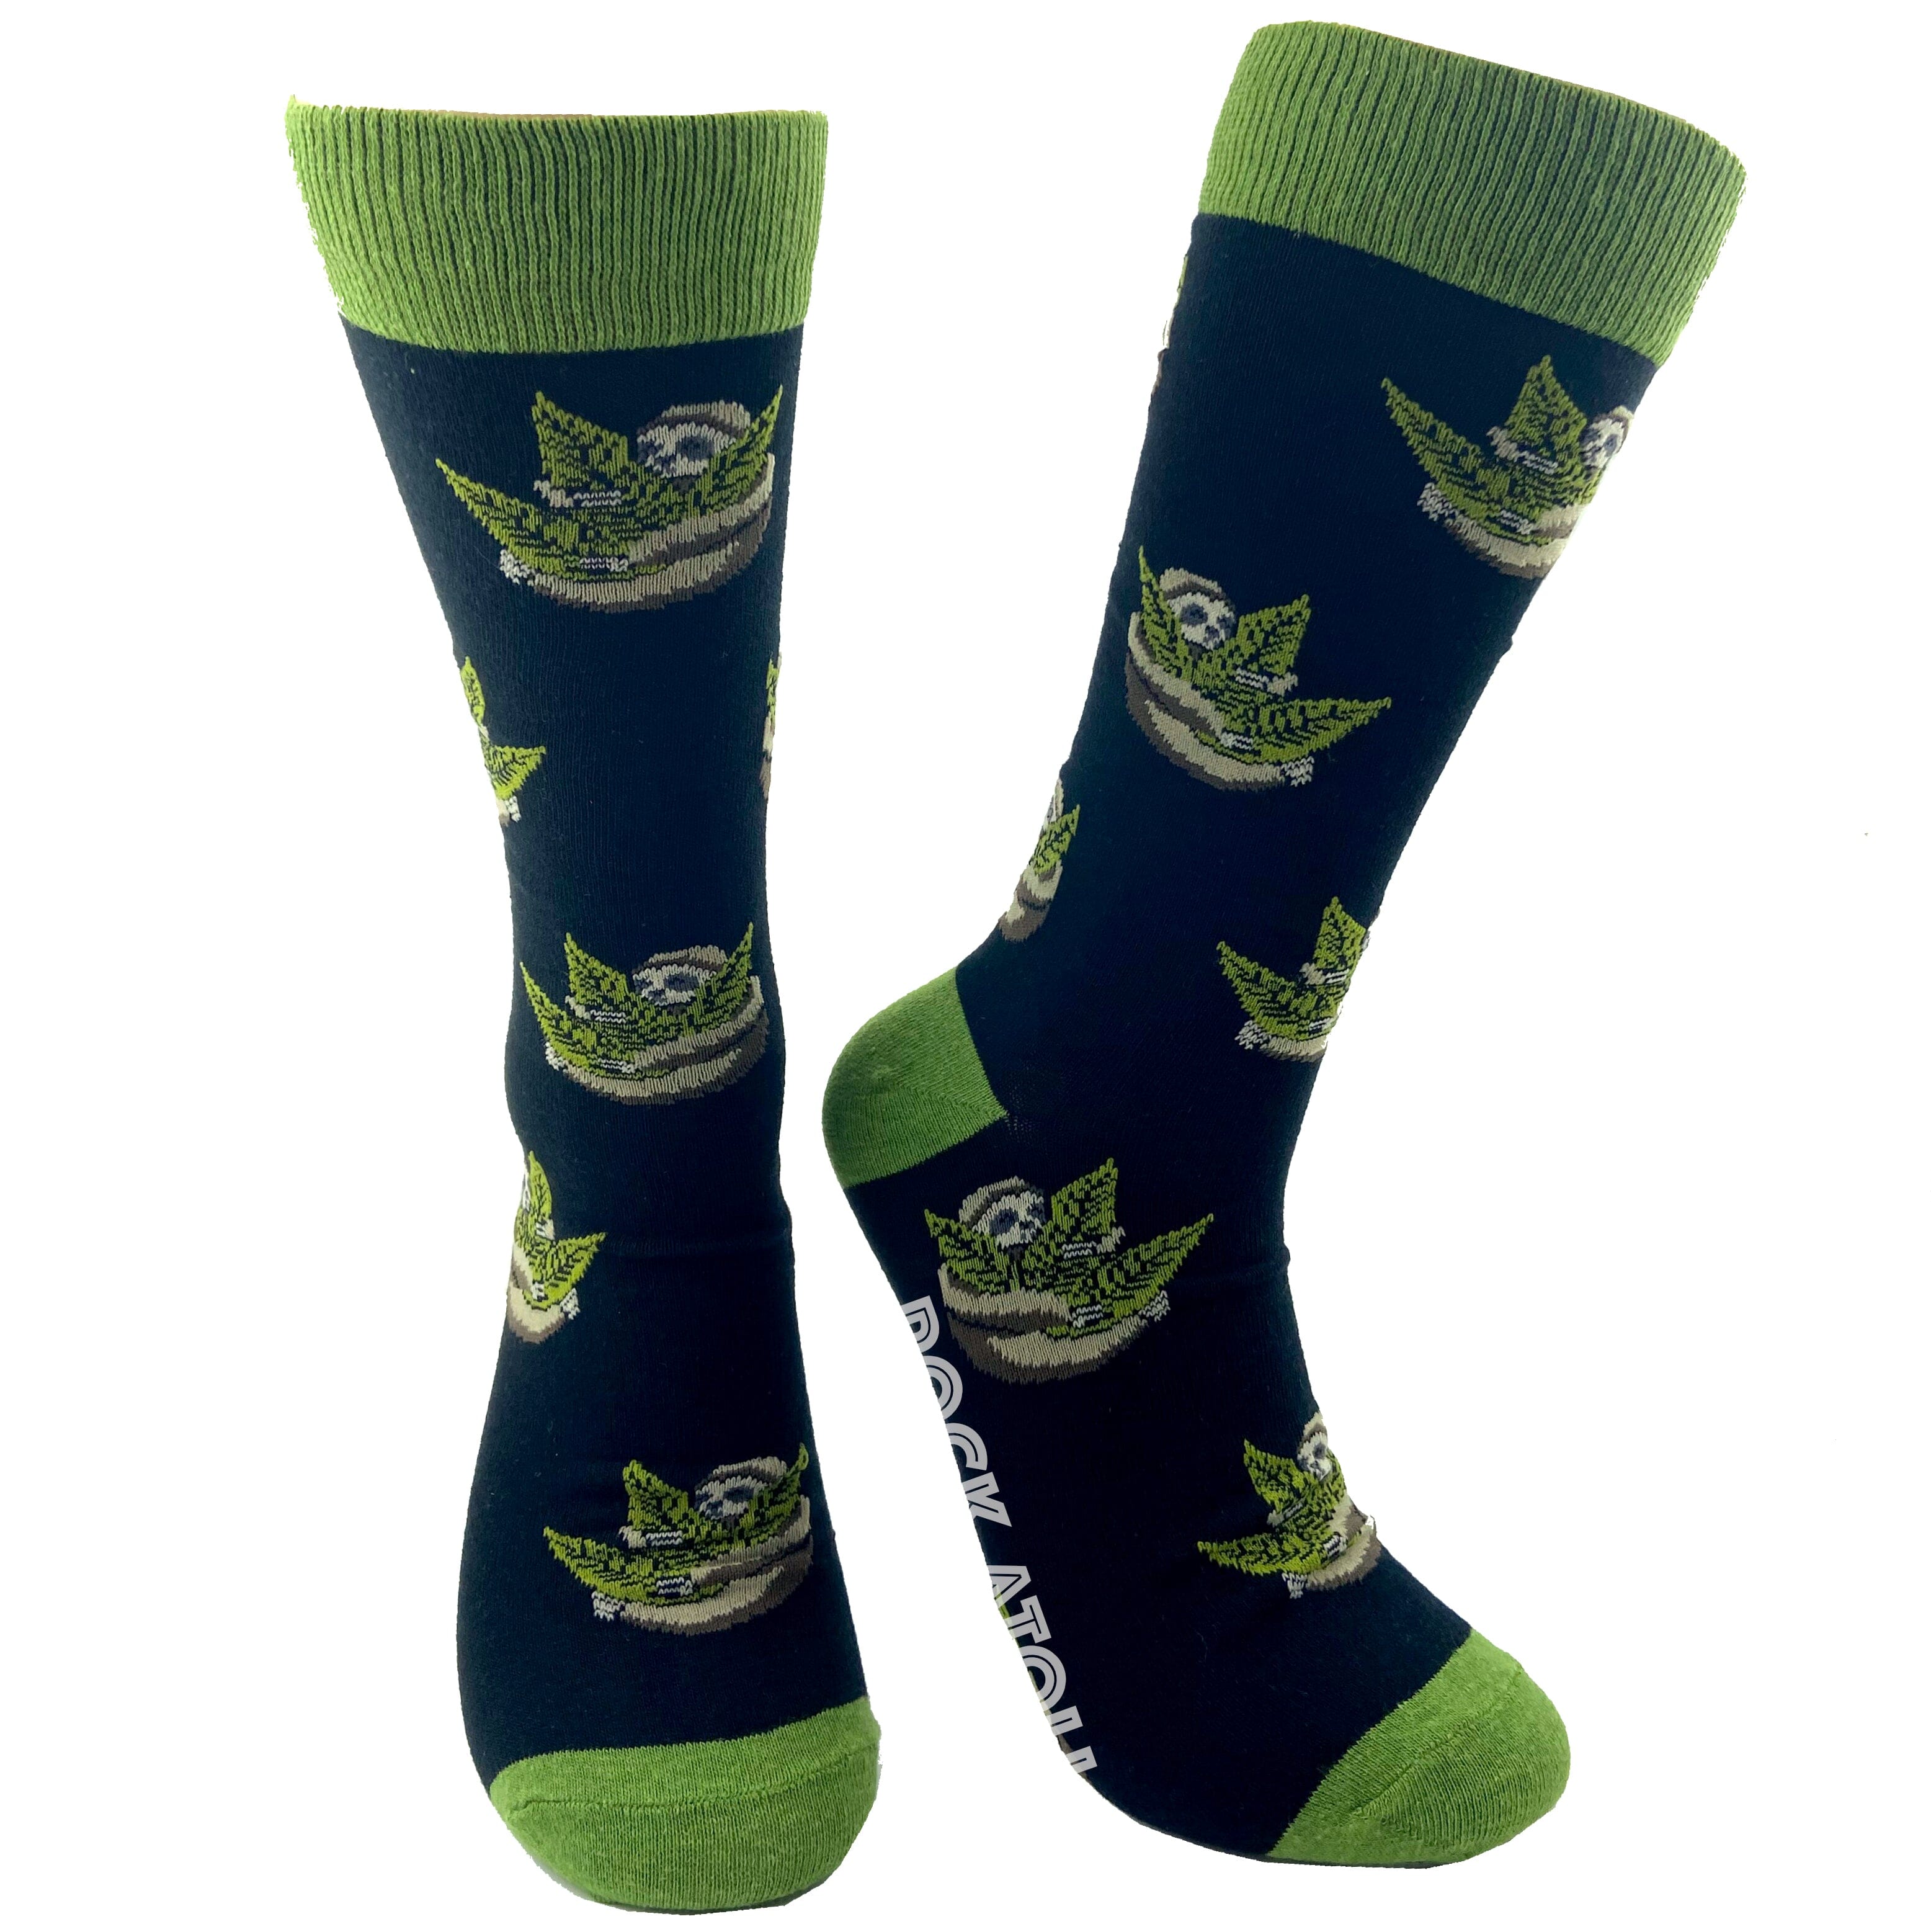 Stoner Sloths Weed Cannabis Leaf Patterned Novelty Crew Socks in Black